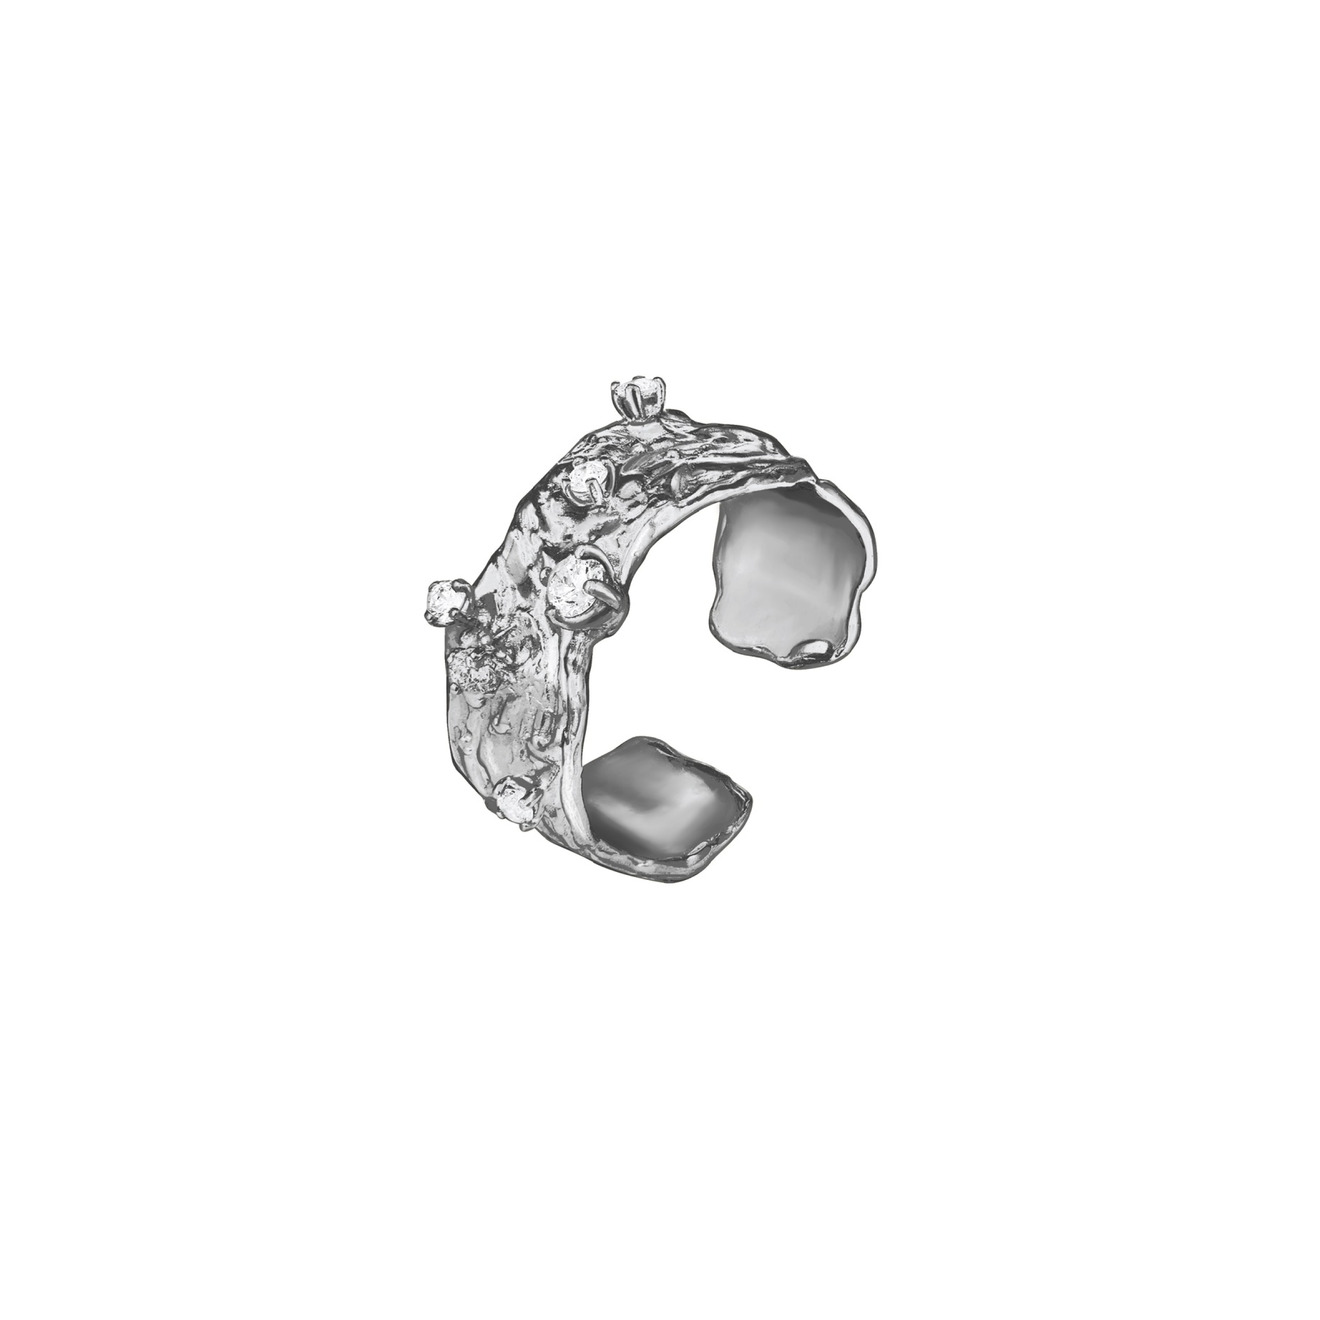 Nastya Maximova Безразмерное кольцо из серебра с фианитами nastya maximova серьги овалы из серебра с фианитами